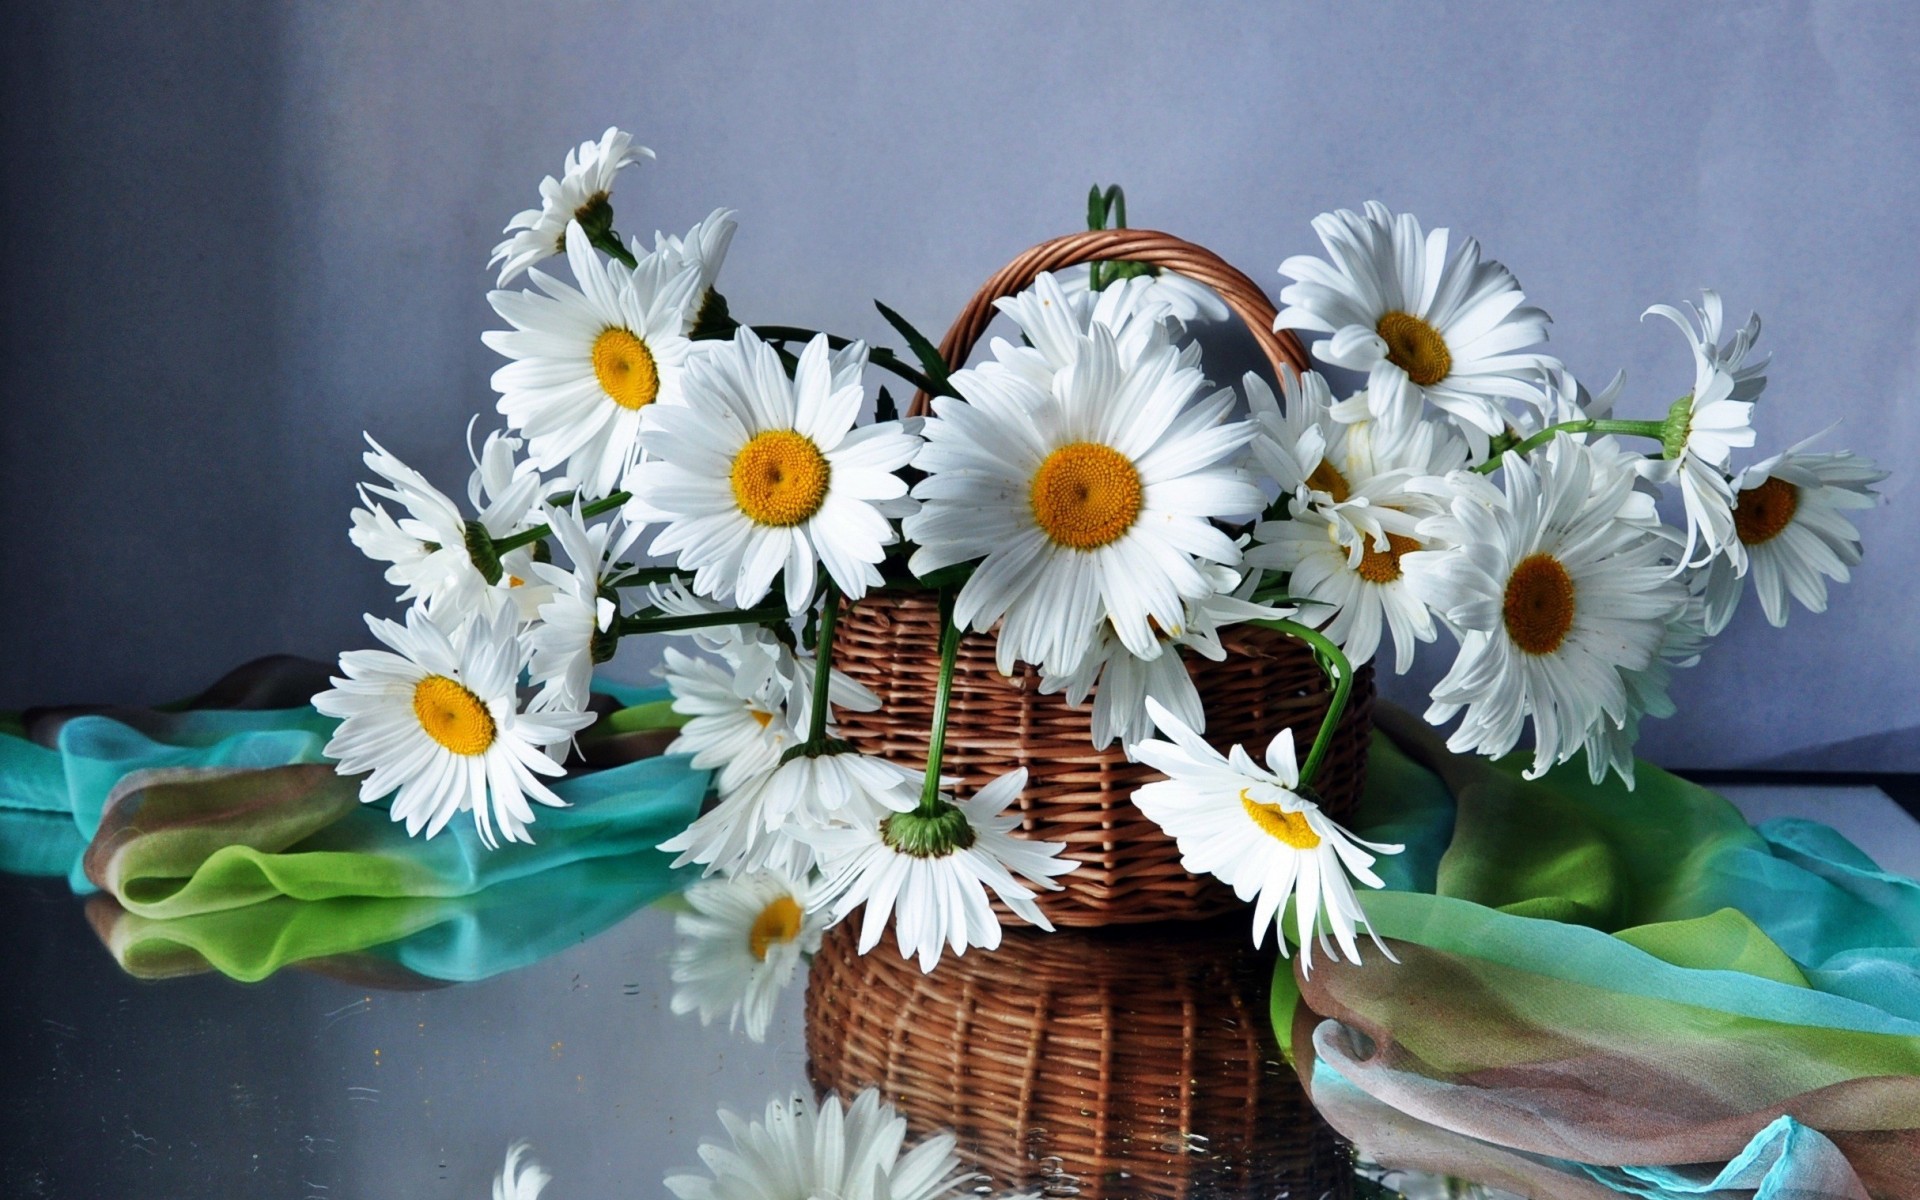 daisies, Flowers, Flower, Bouquet, Beautiful, Field, Basket, Still